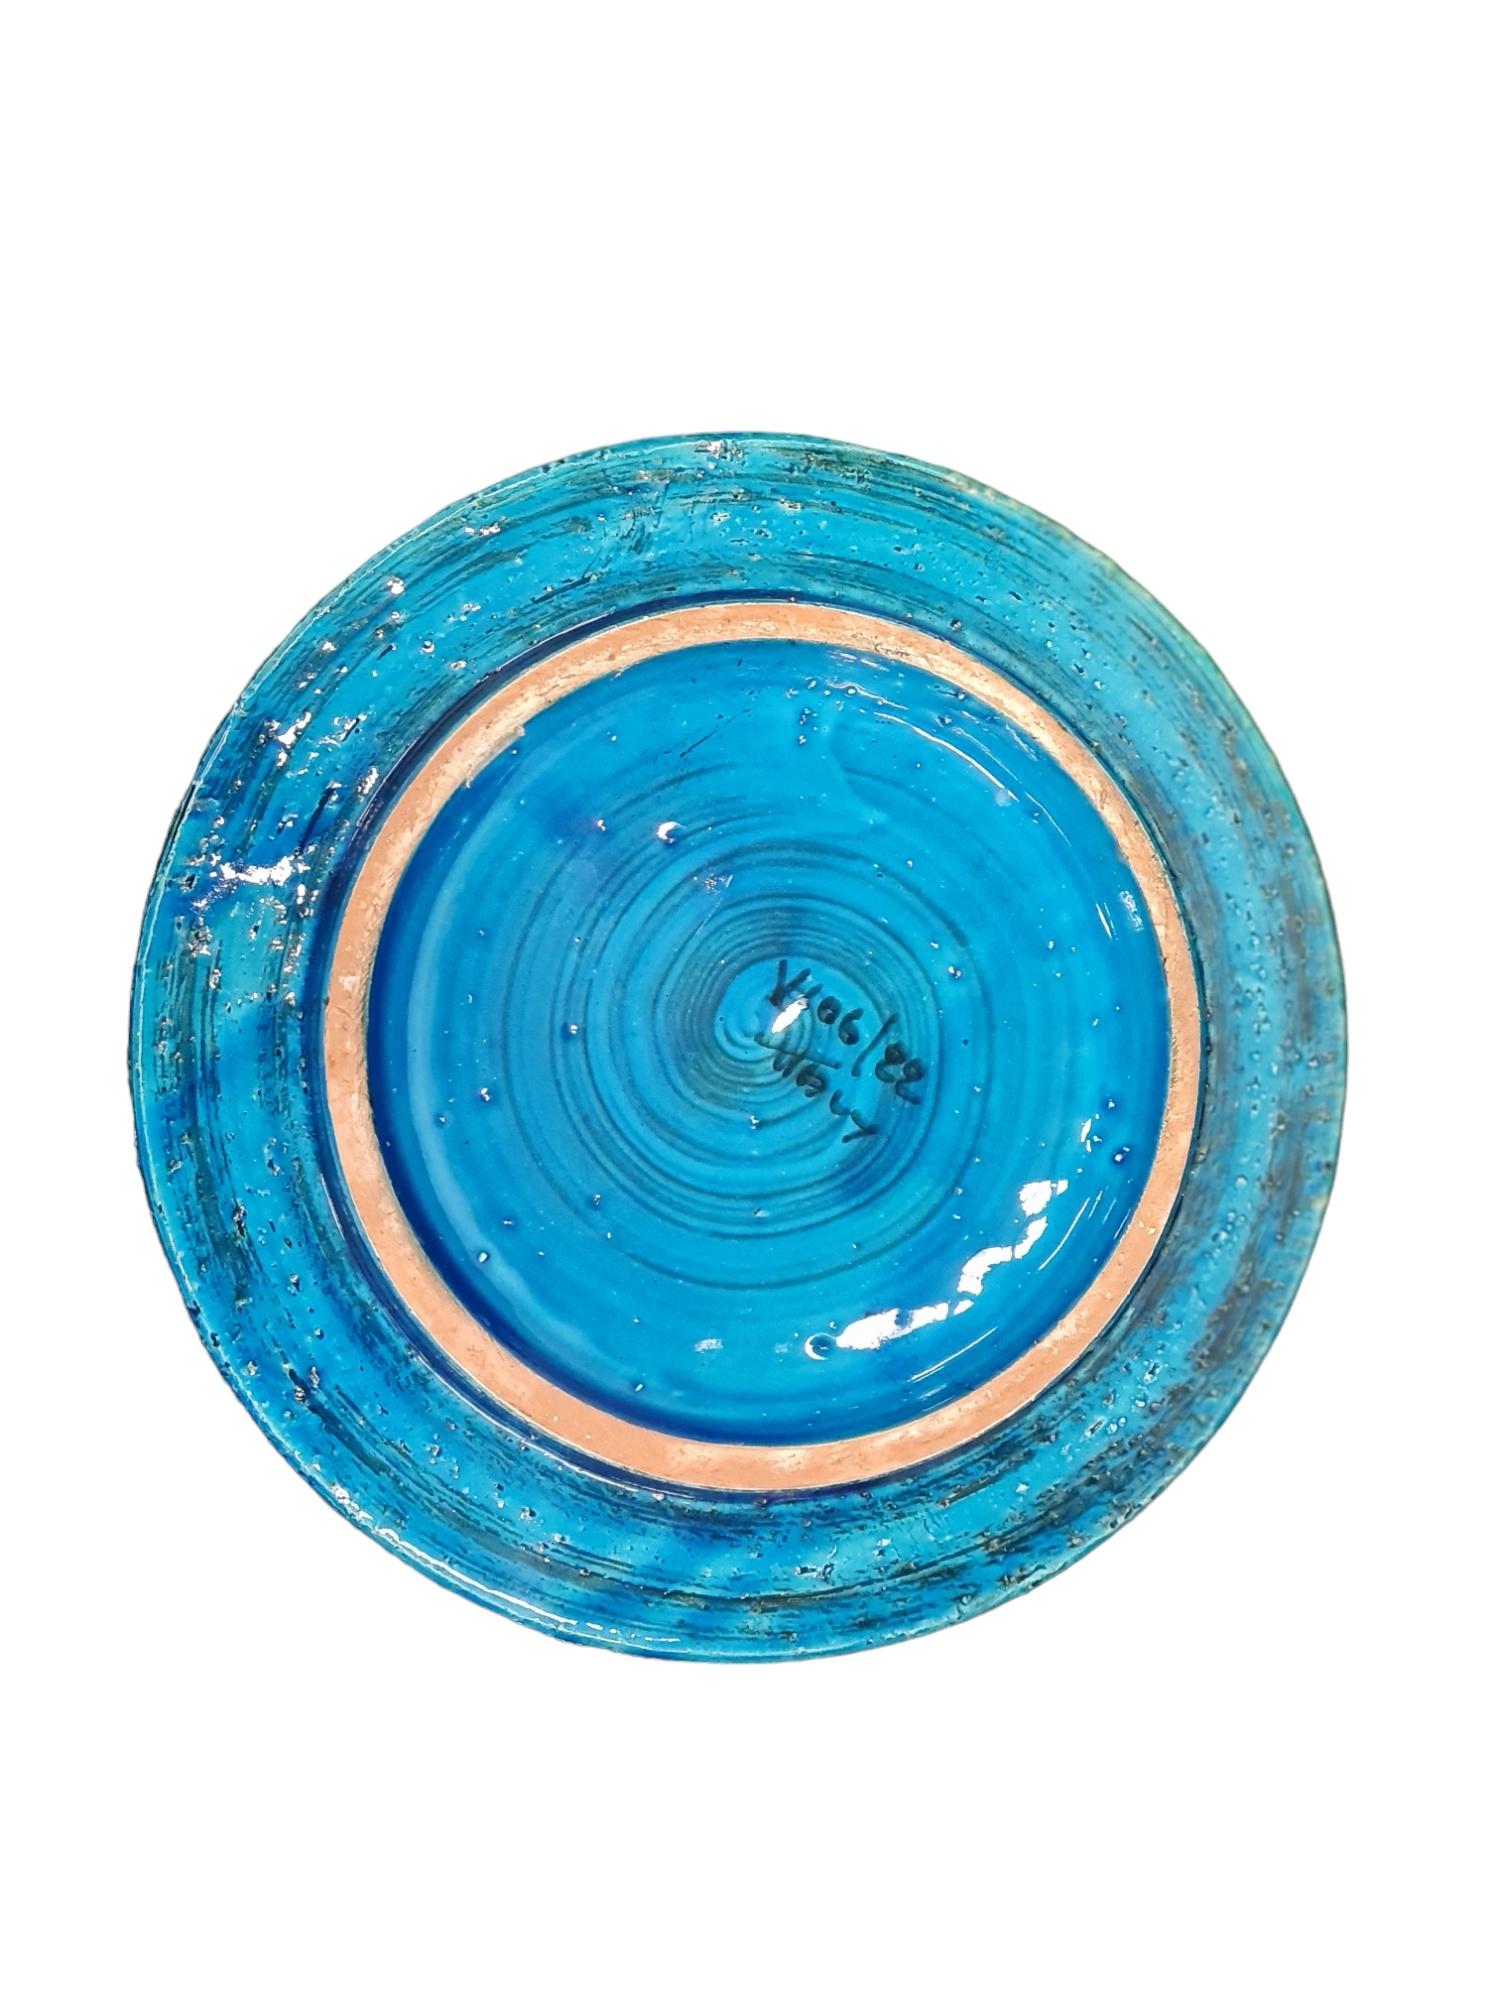 Set of Two Bitossi Aldo Londi Rimini Blue Glazed Ceramics Pieces, Italy For Sale 1